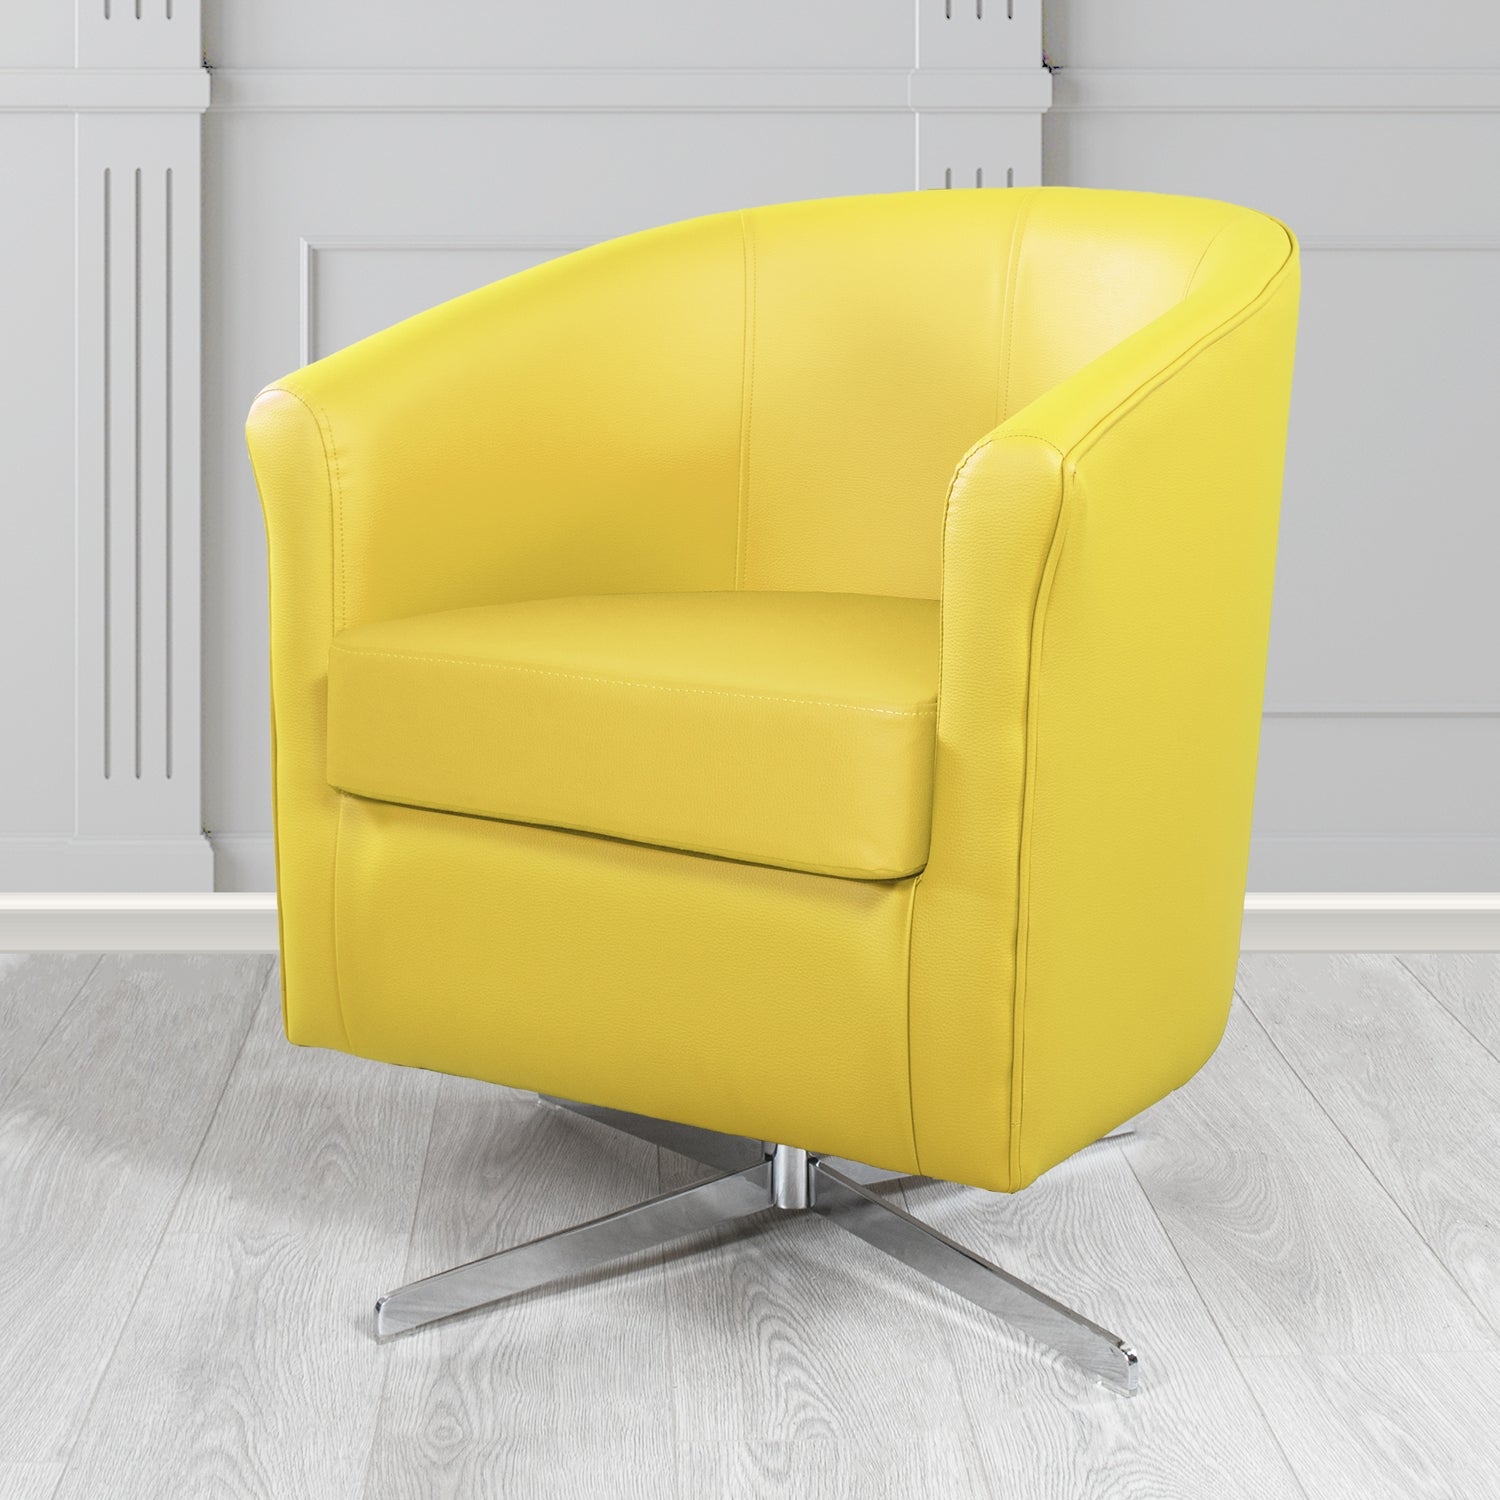 Cannes Swivel Tub Chair in Just Colour Lemon Crib 5 Faux Leather - The Tub Chair Shop